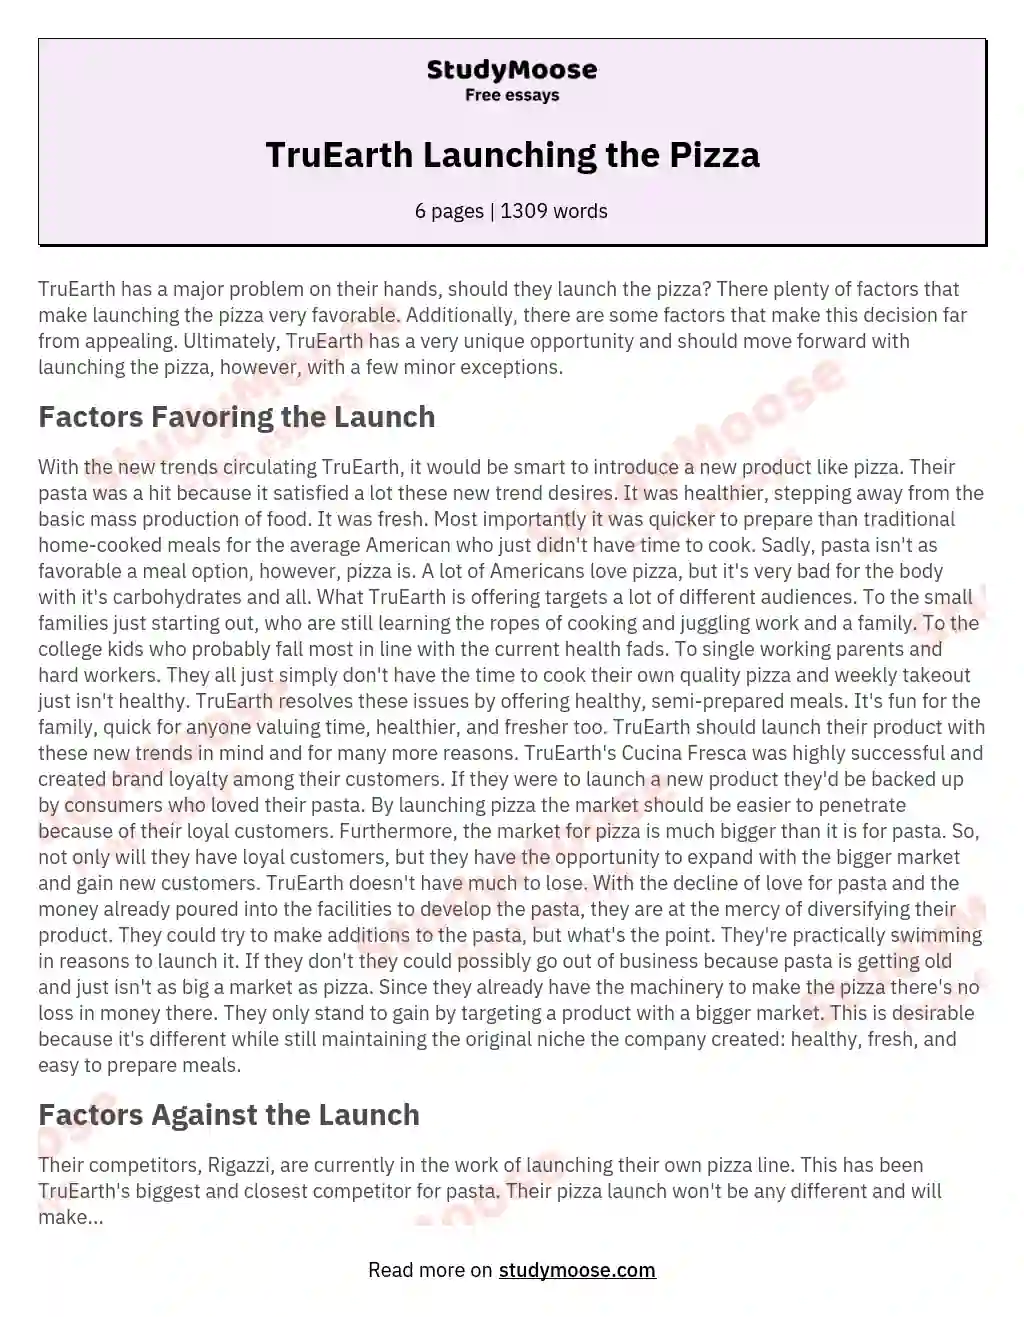 TruEarth Launching the Pizza essay